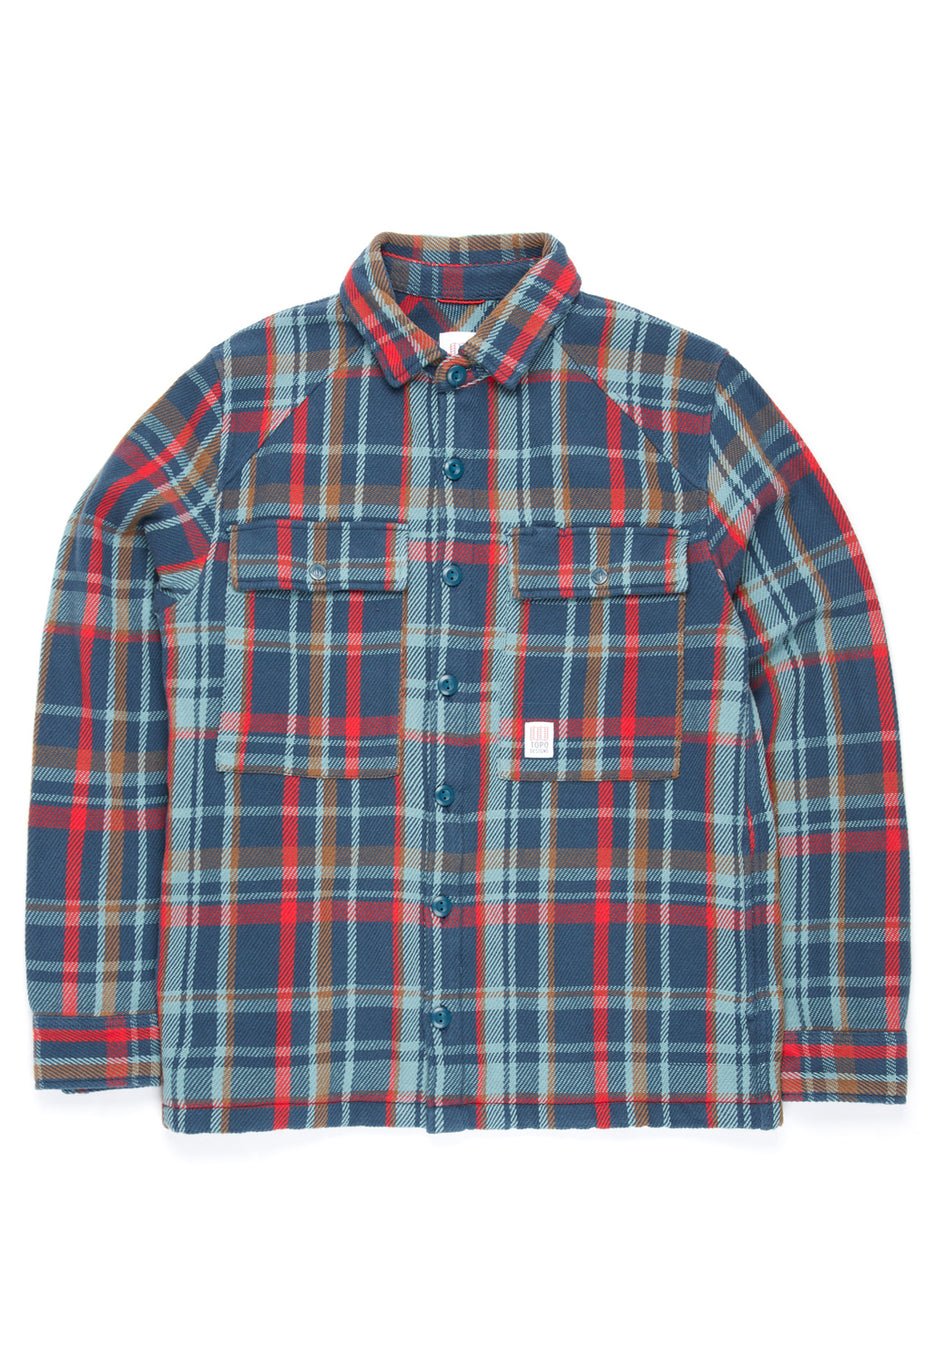 Topo Men's Mountain Shirt Jacket - Pond Blue Multi Plaid